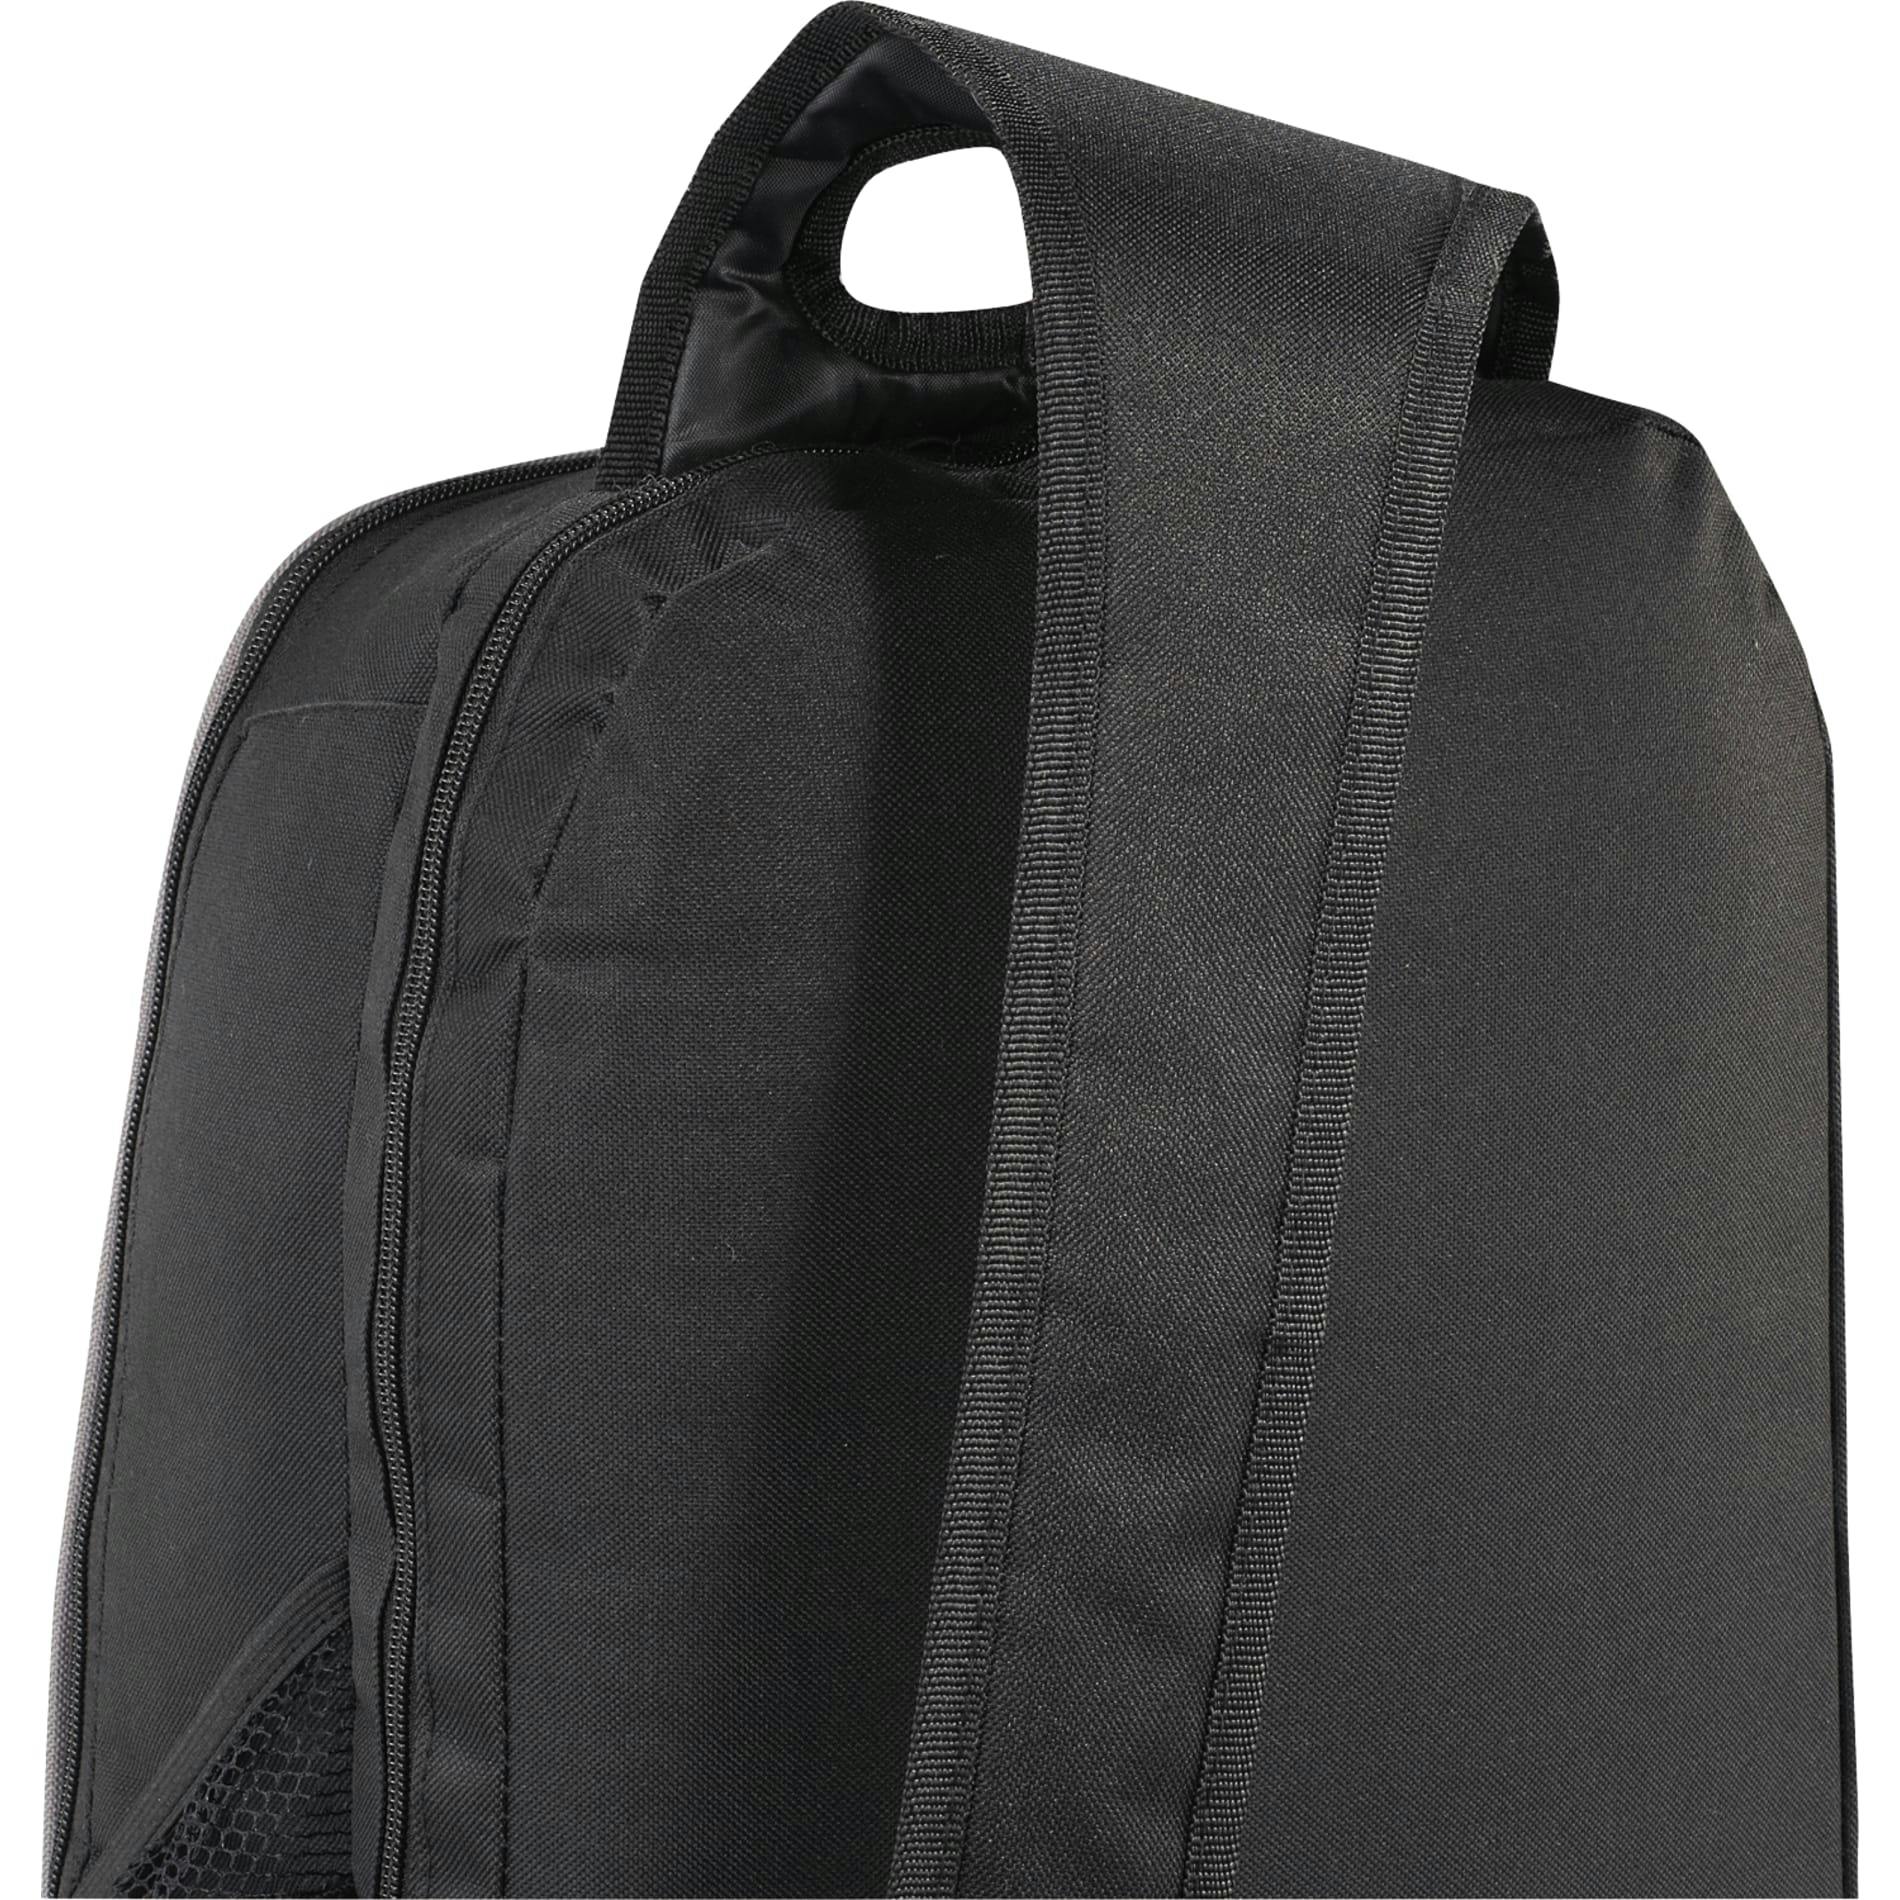 Summit TSA 15" Computer Sling Backpack - additional Image 6